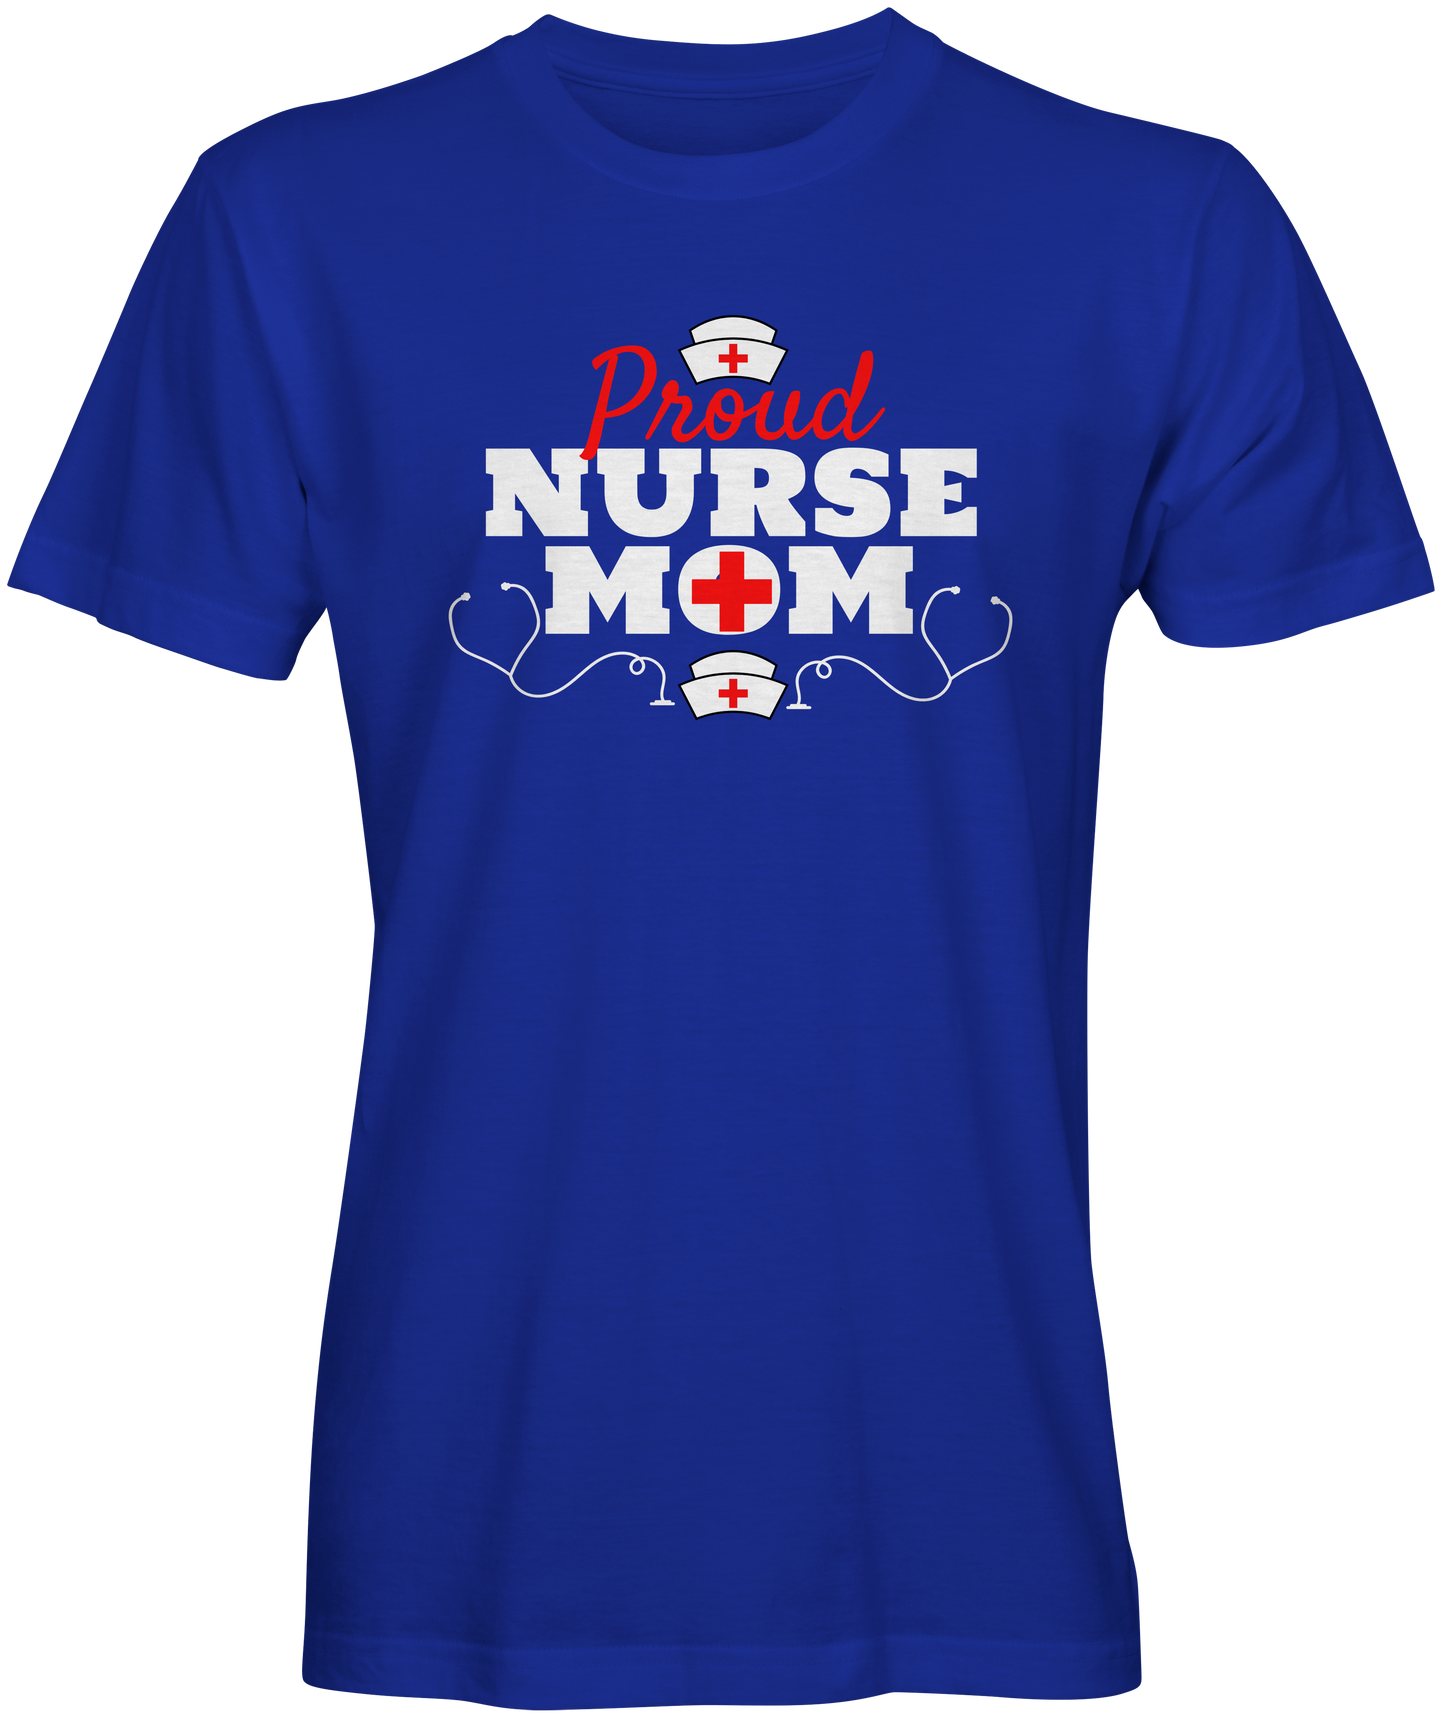 Nurse Mom Graphic Tee